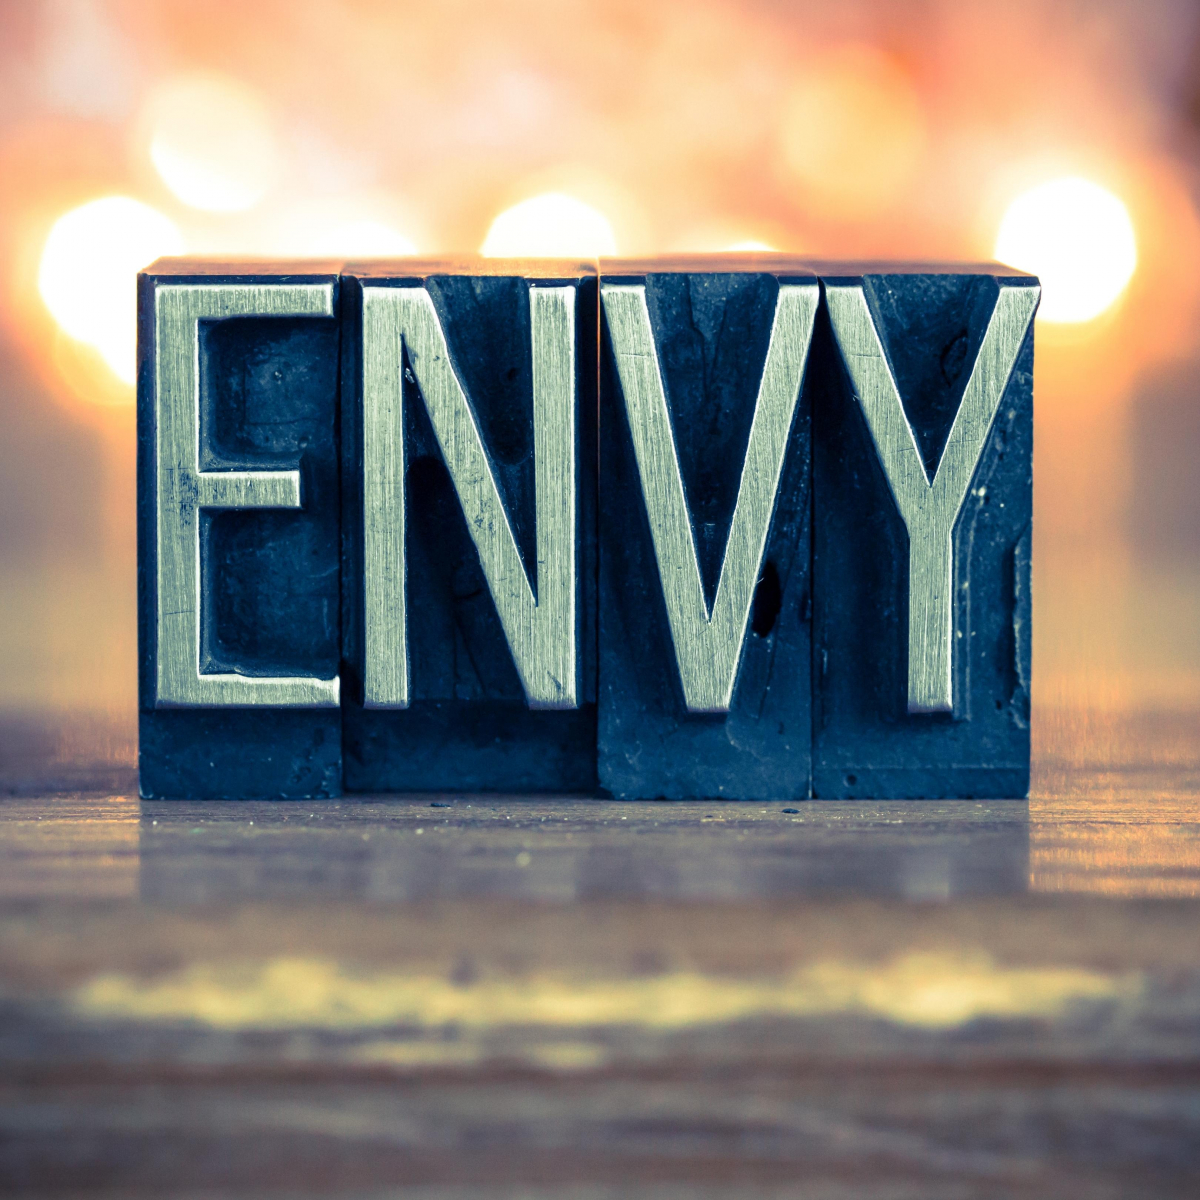 Envy: It’s not easy bein’ green